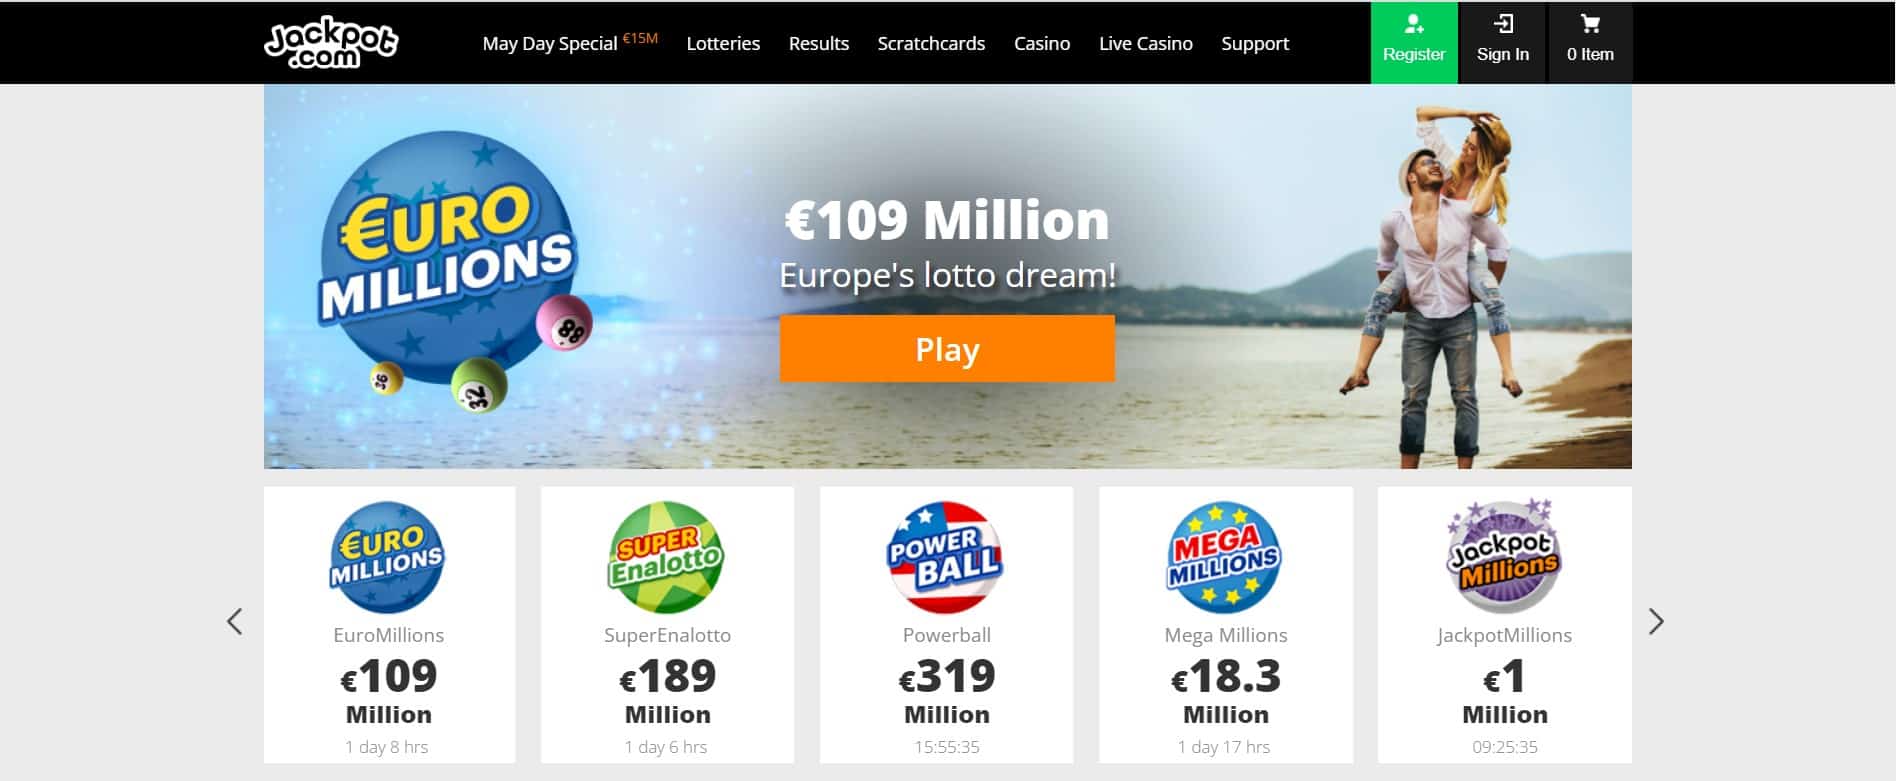 Jackpot.com India